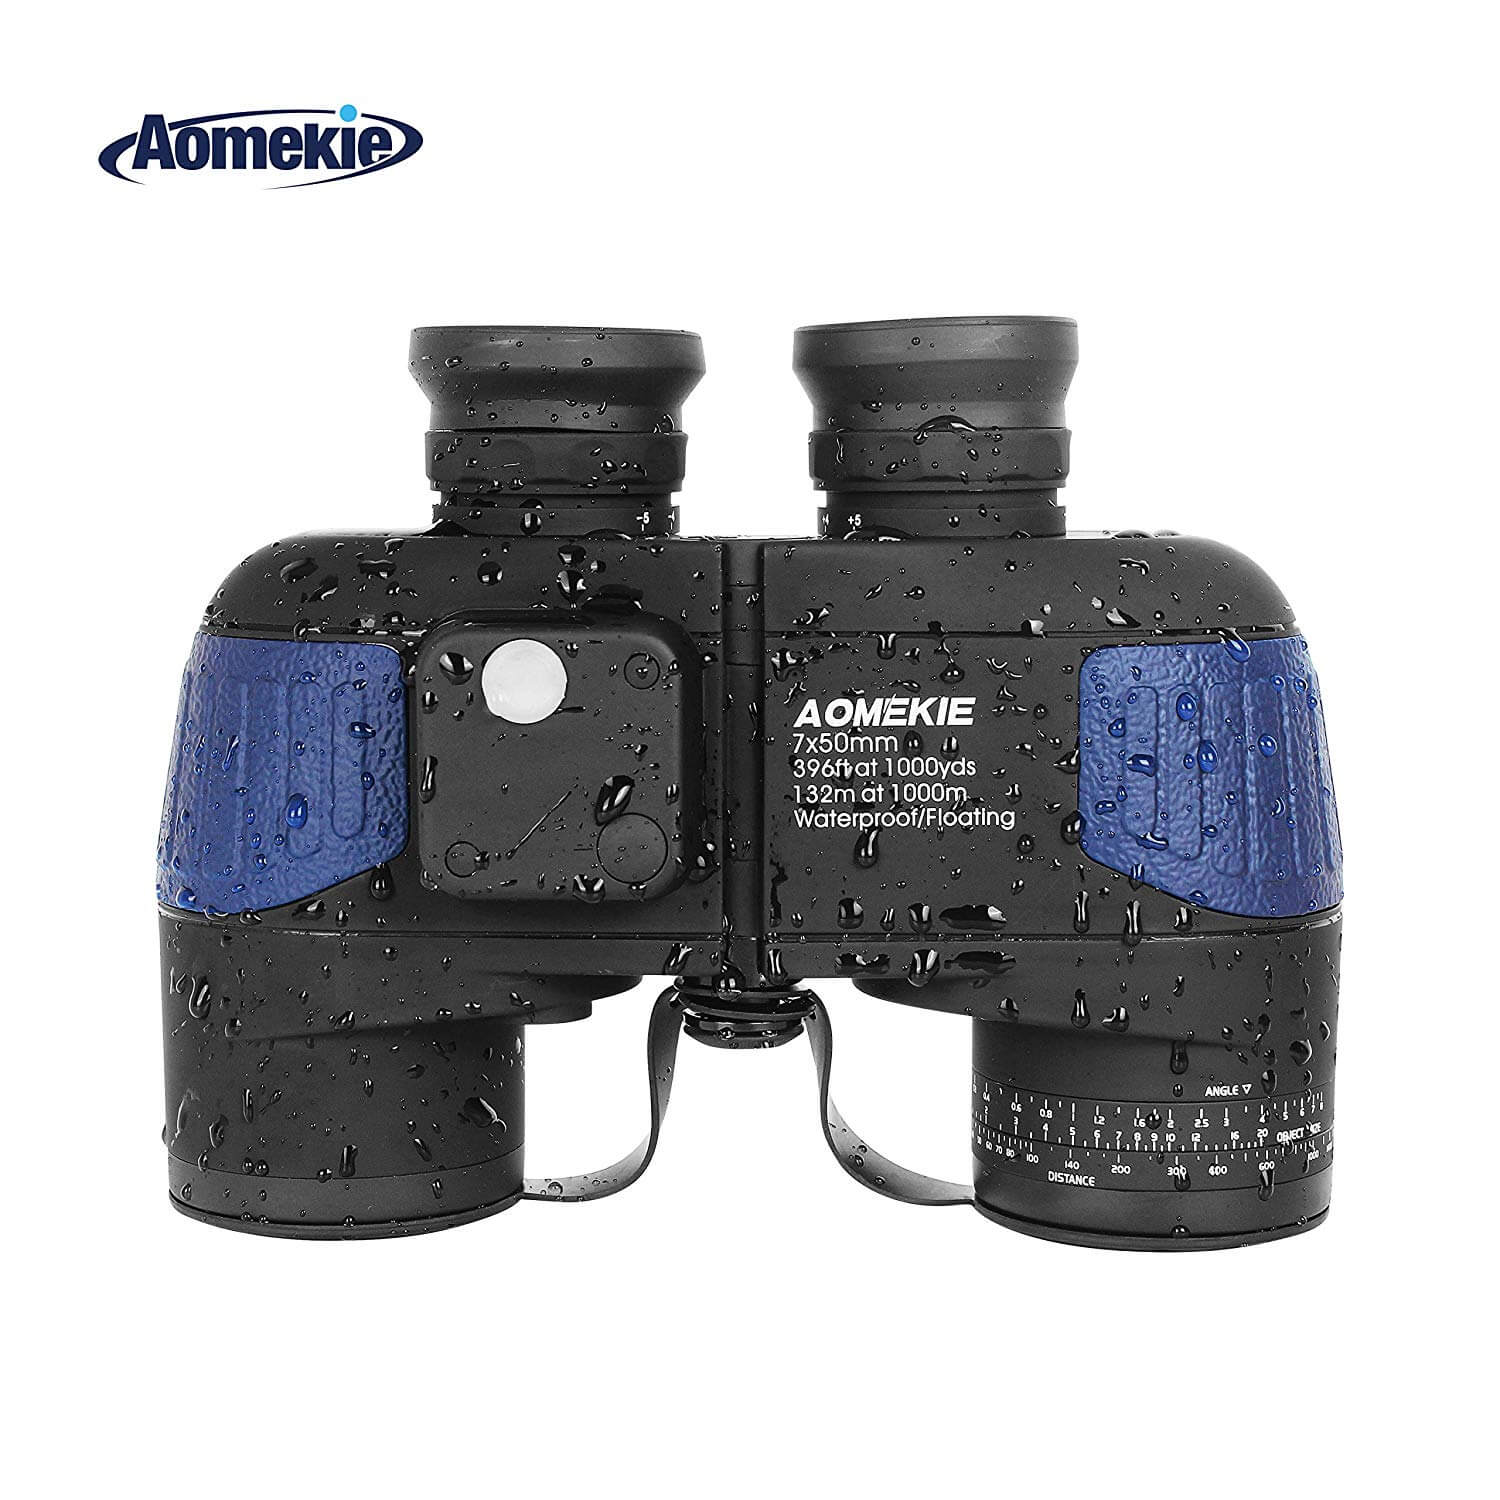 Aomekie Marine Binocular 7x50